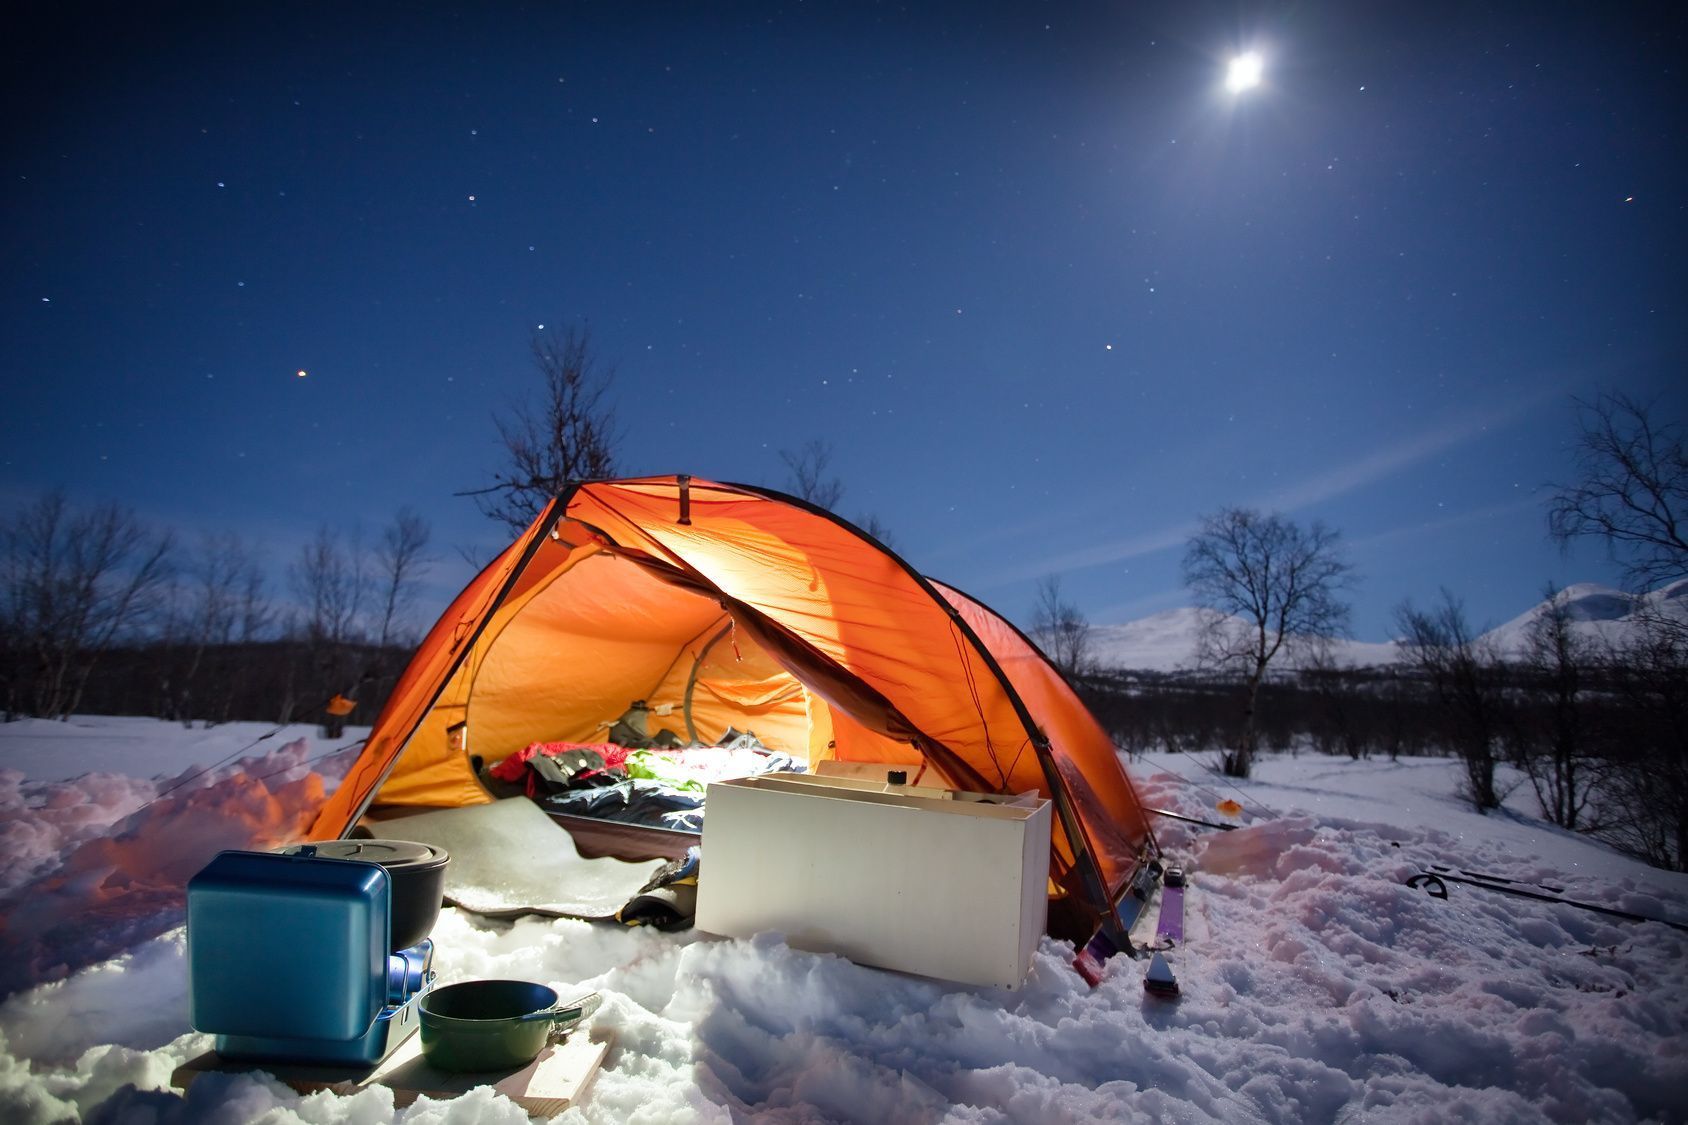 Silvesterurlaub_2015_11_23_Silvester Camping_Schmuckbild_fotolia_Jens Ottoson